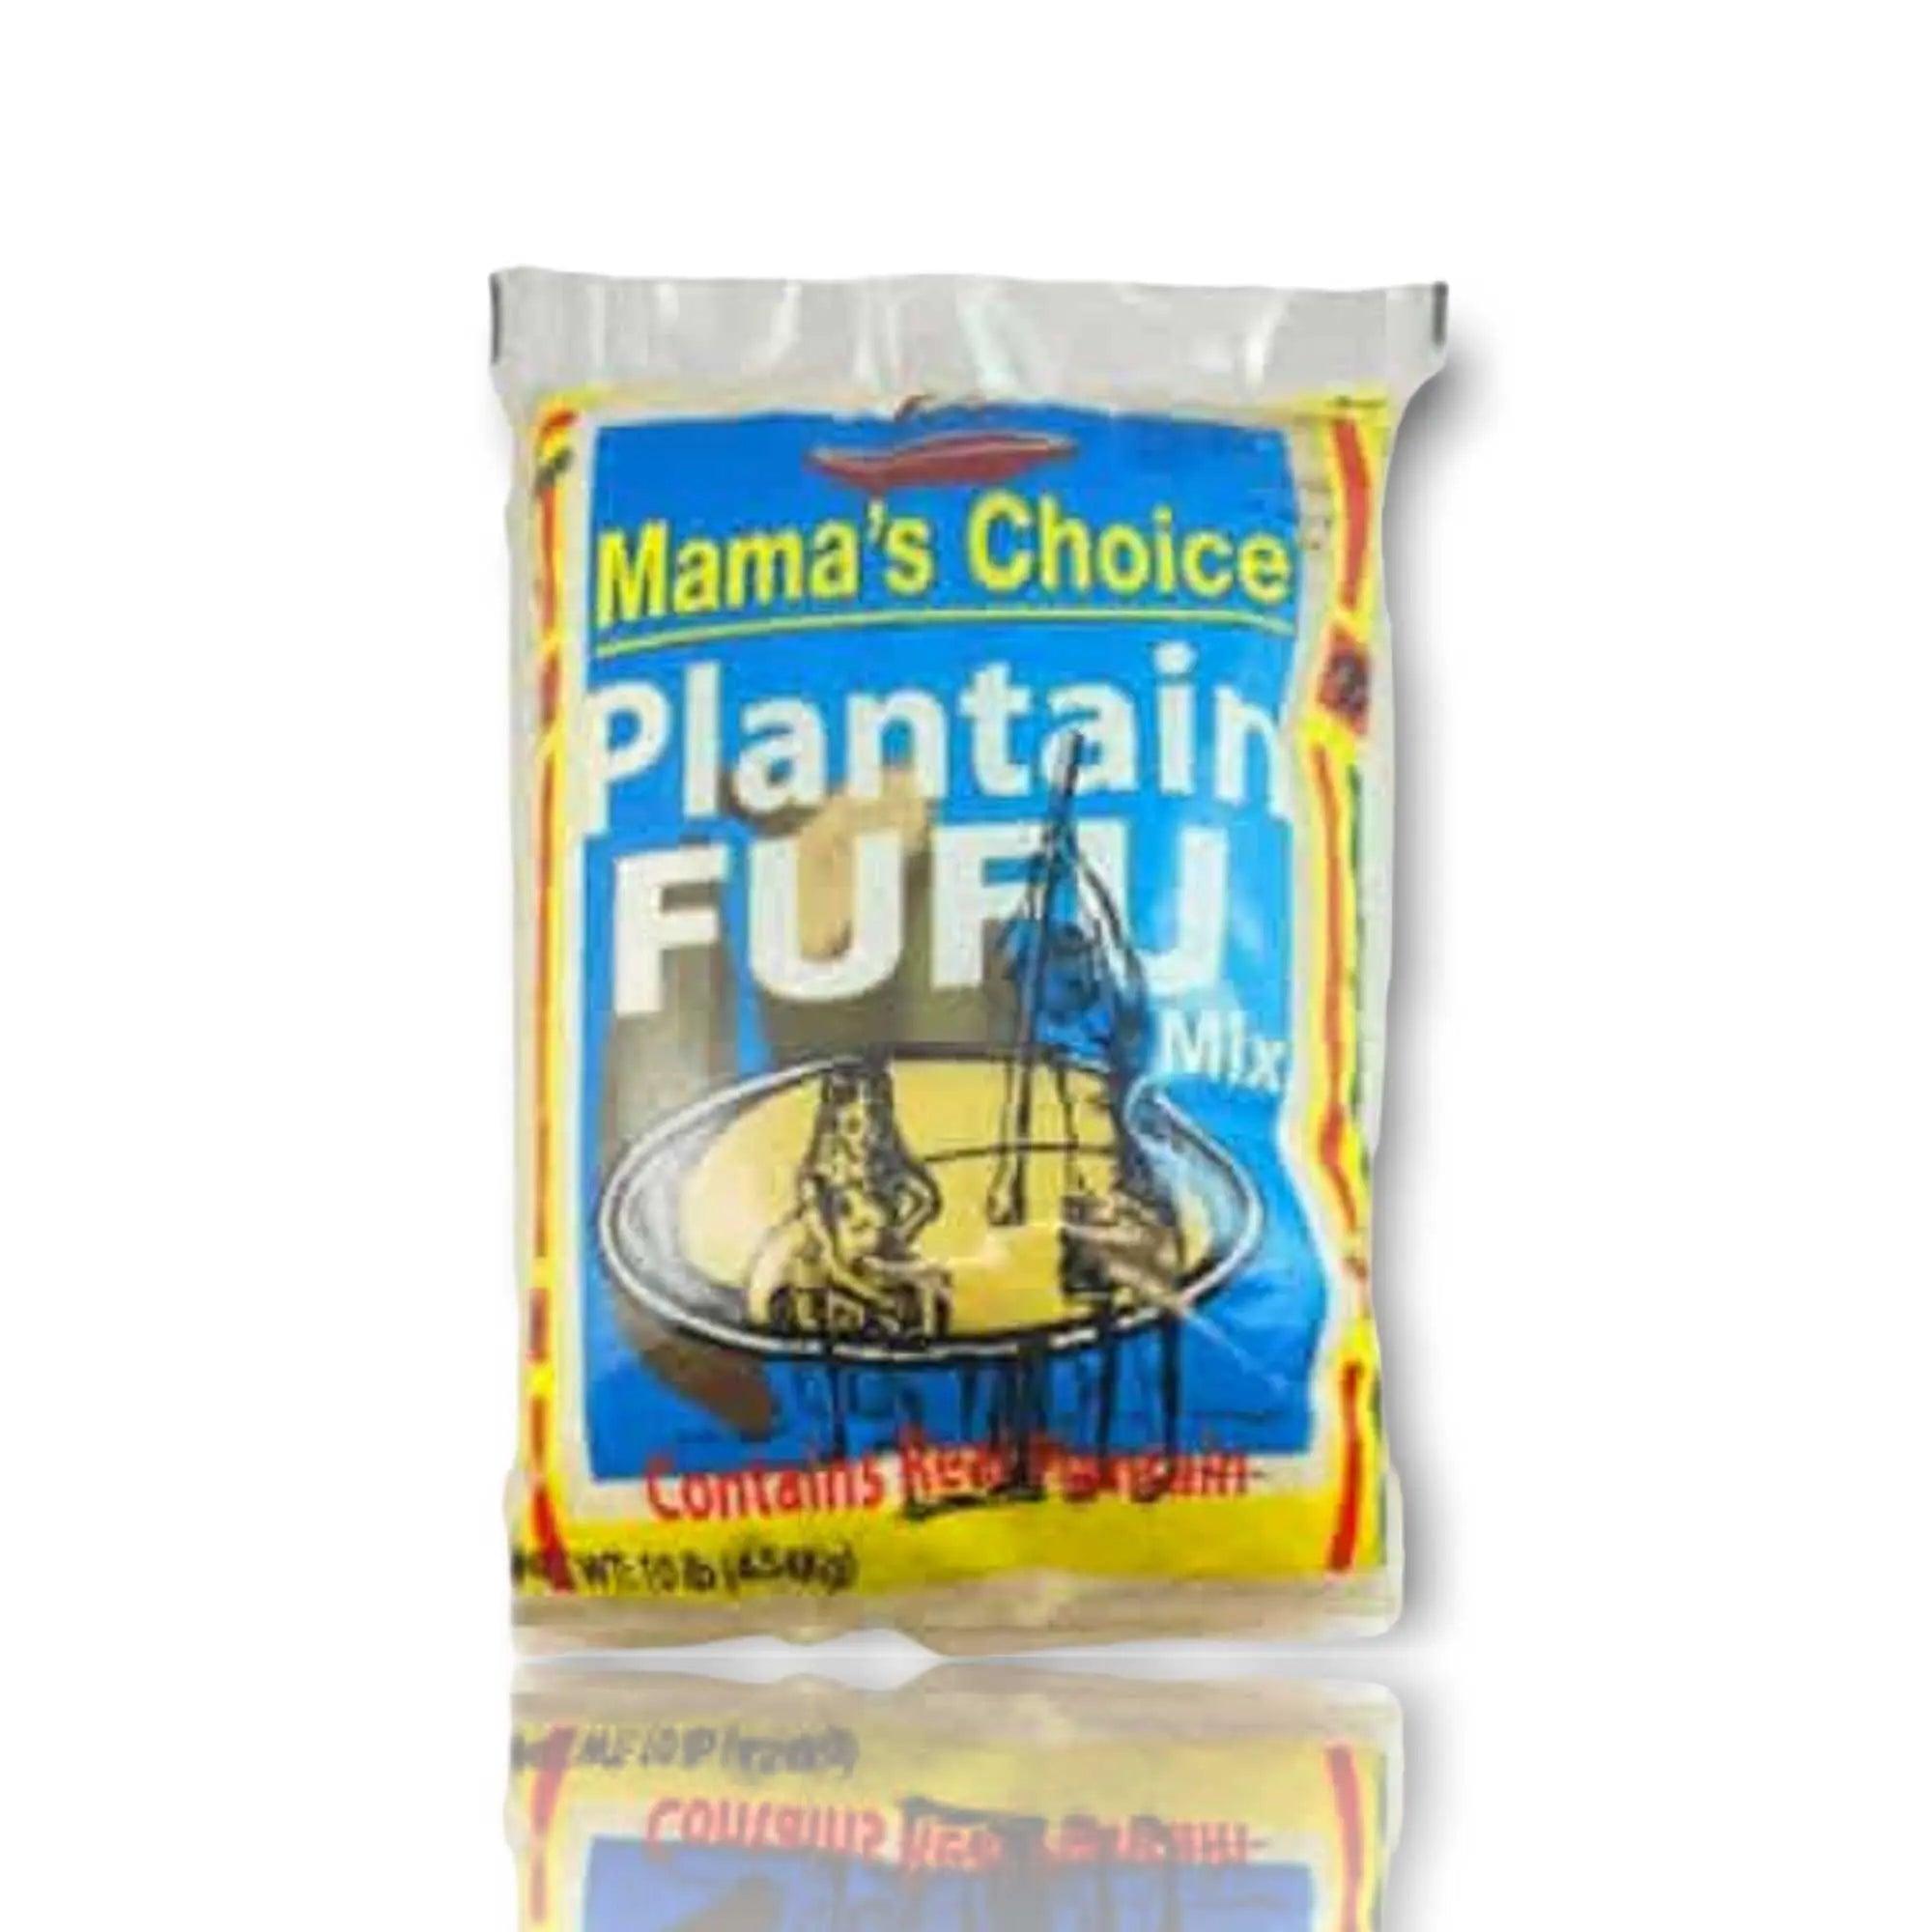 Mama's Choice Plantain Fufu Mix - Contain Real Plantain  (4.5kg) - Honesty Sales U.K